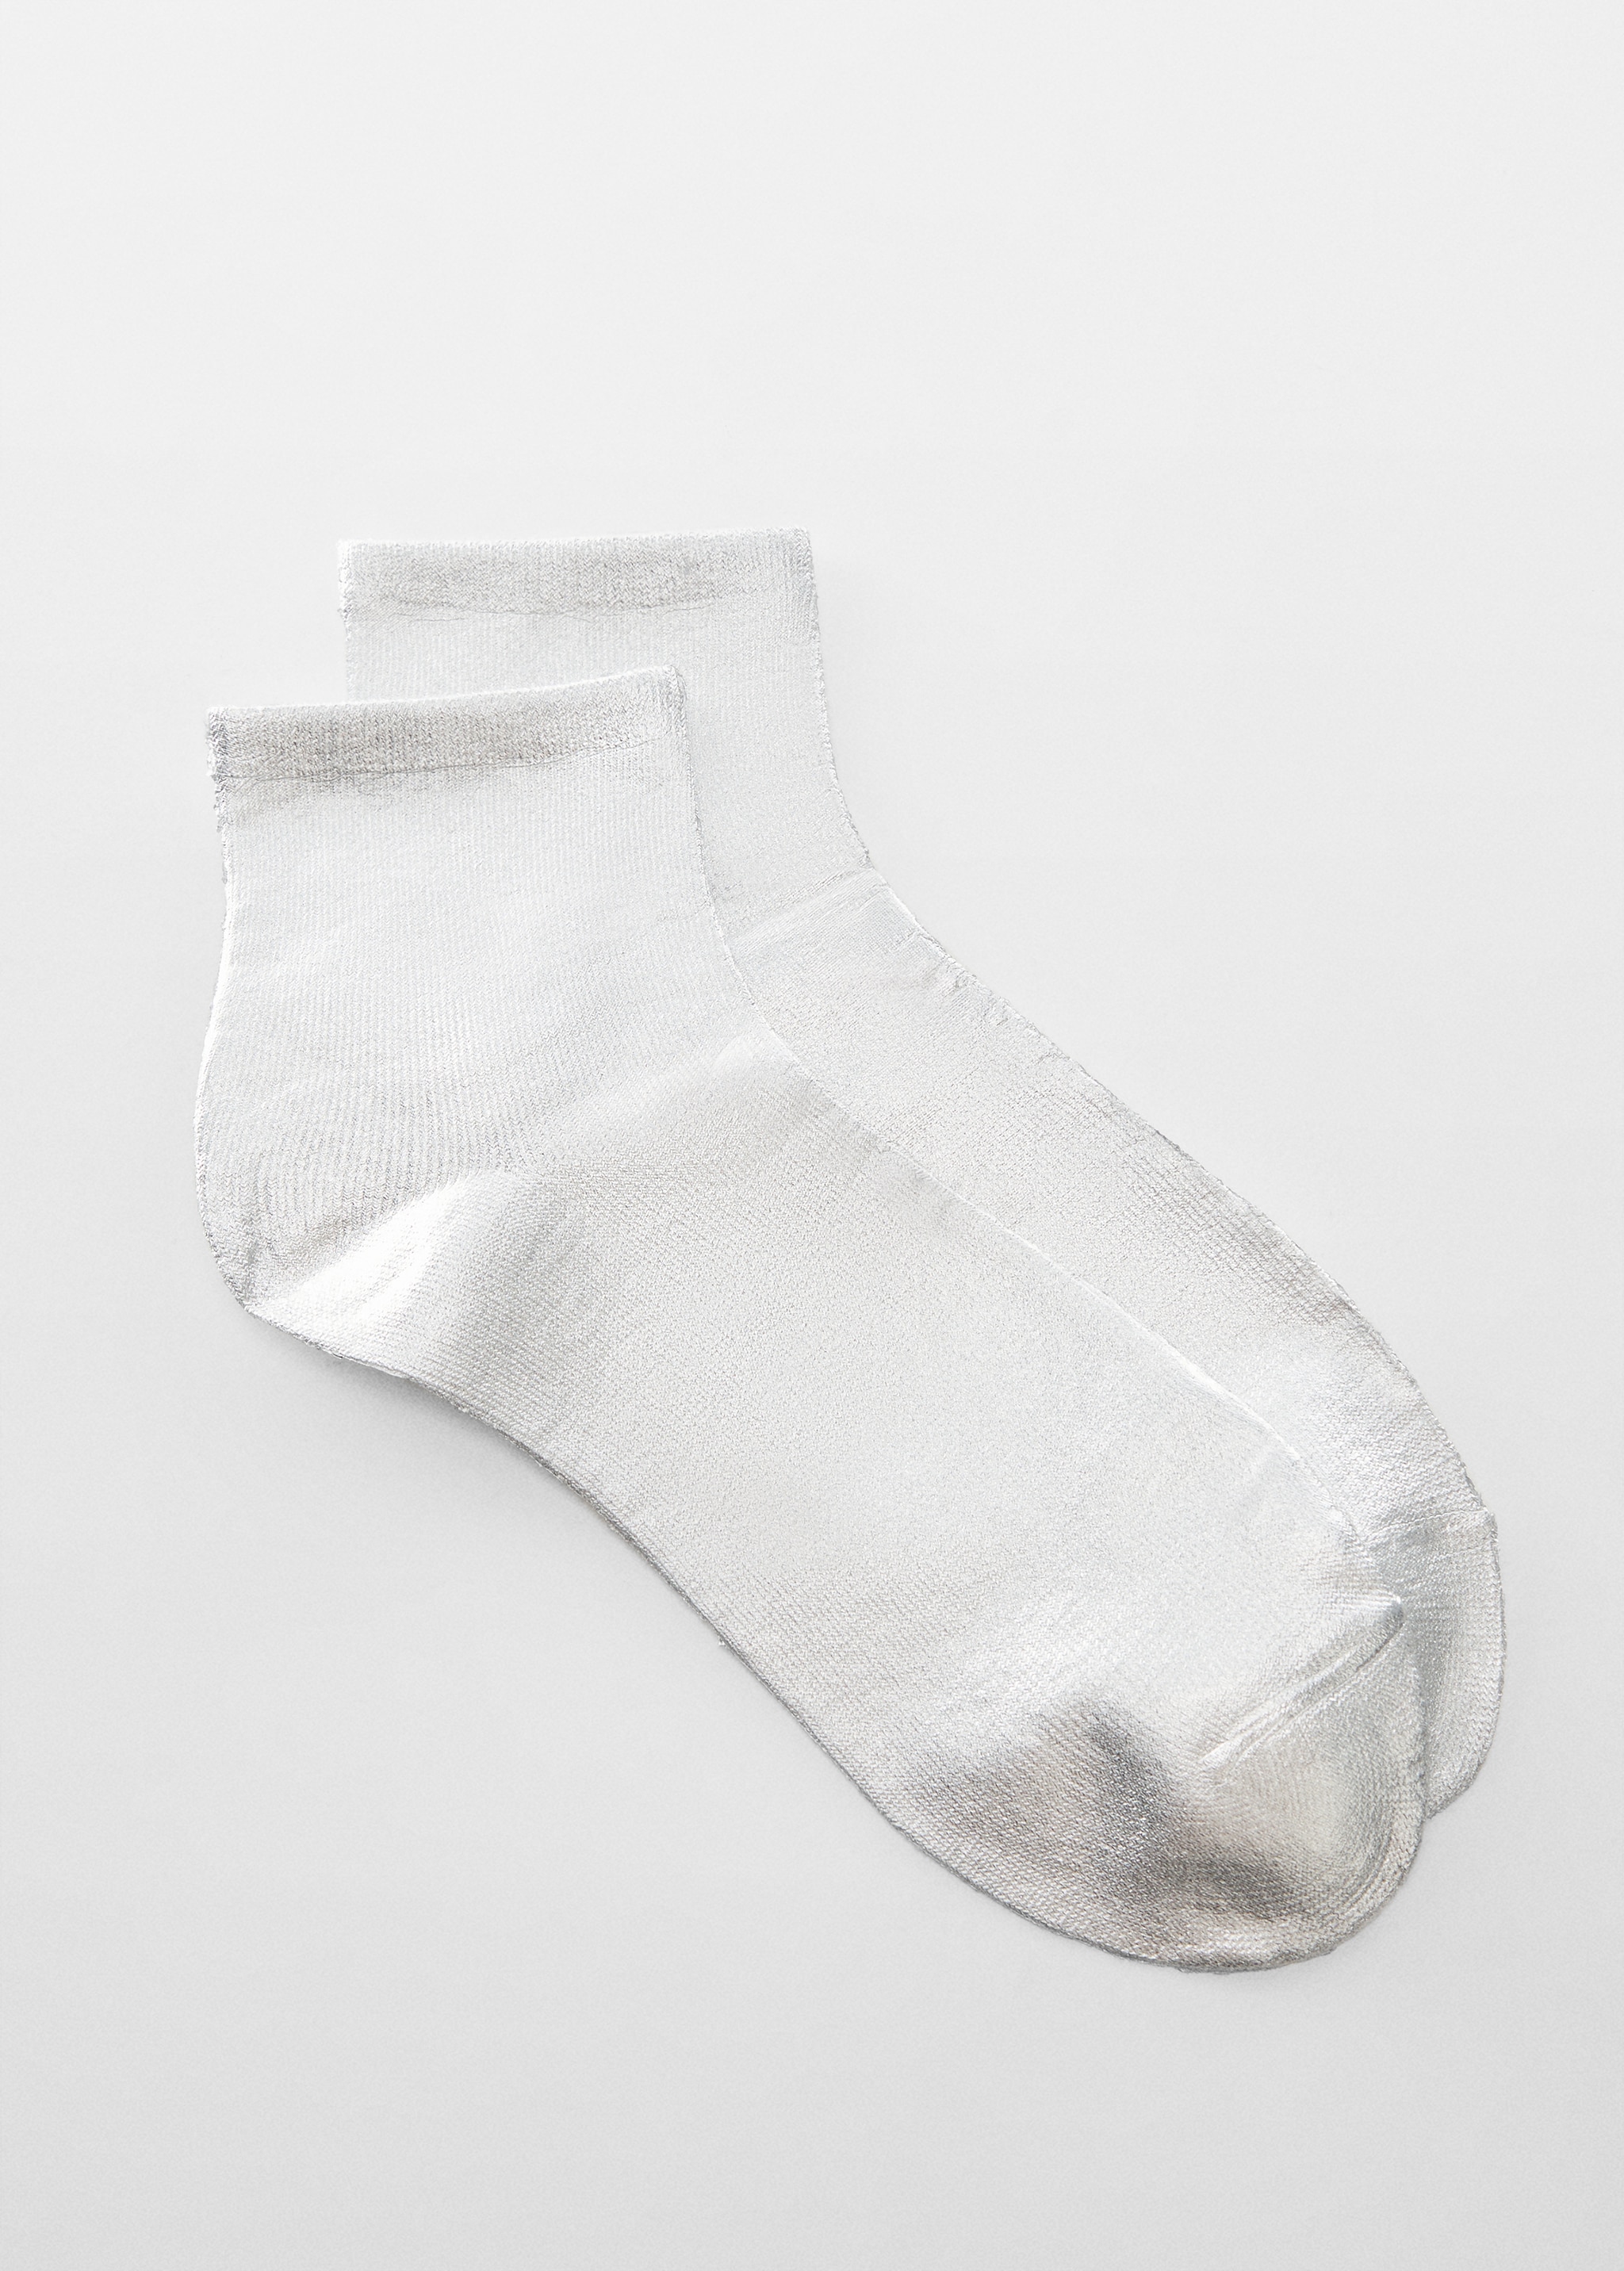 Foil socks - Medium plane